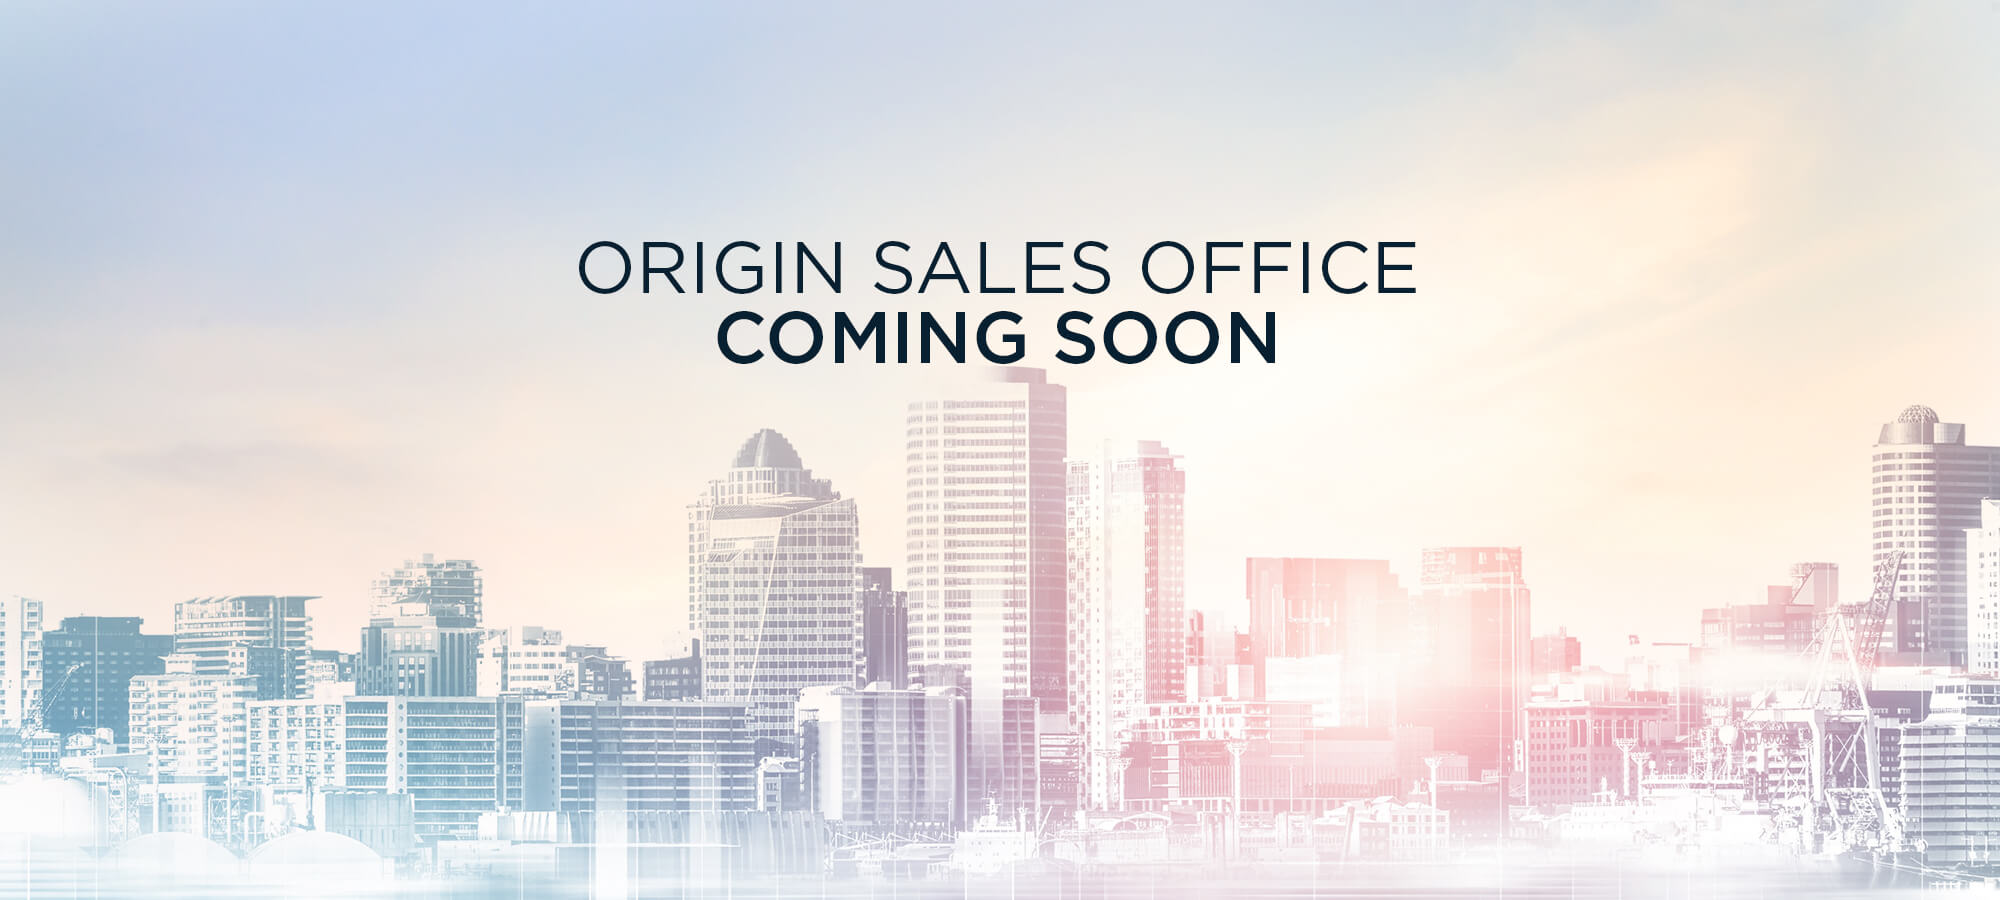 Origin Sale Office Coming Soon